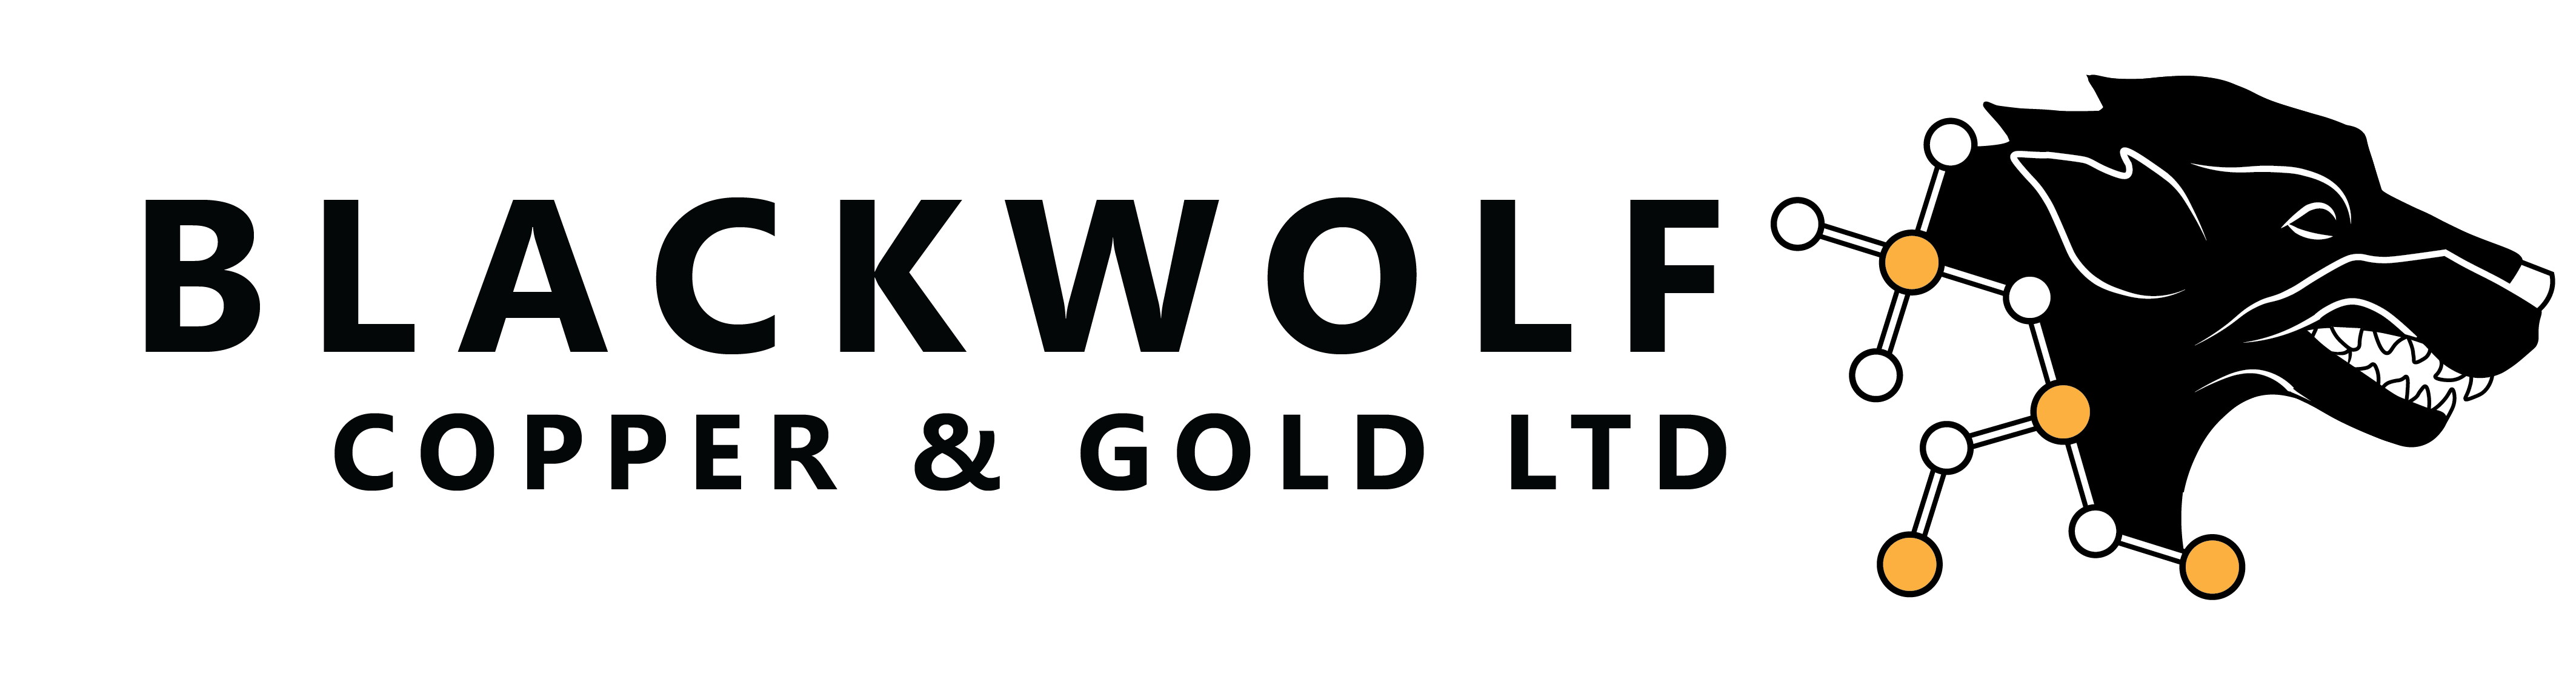 Blackwolf Copper and Gold Ltd.